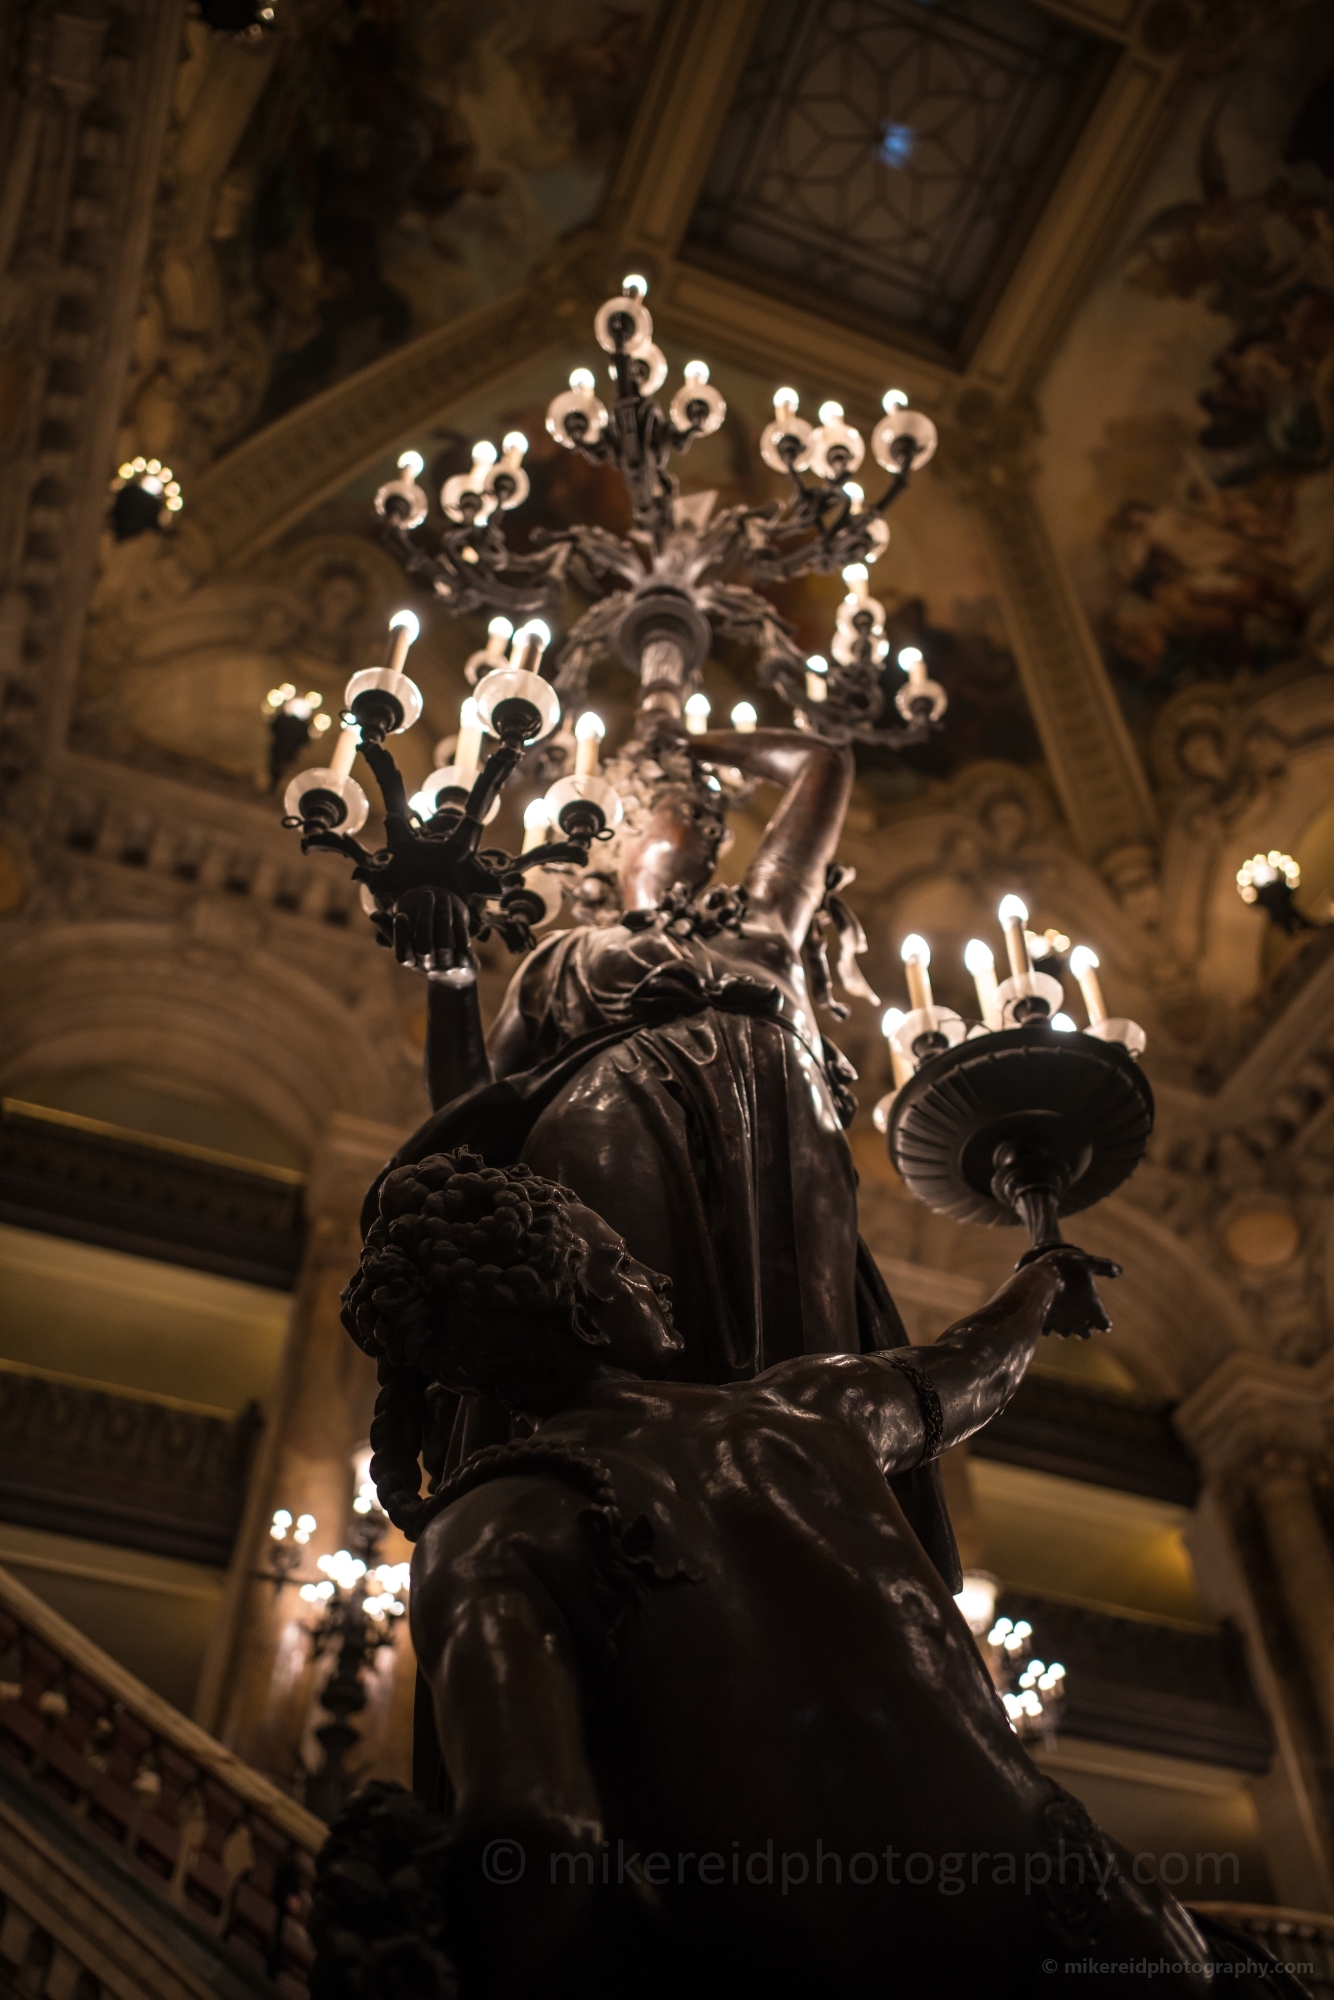 Palais Garnier Paris Opera House Interior Lights and Statues